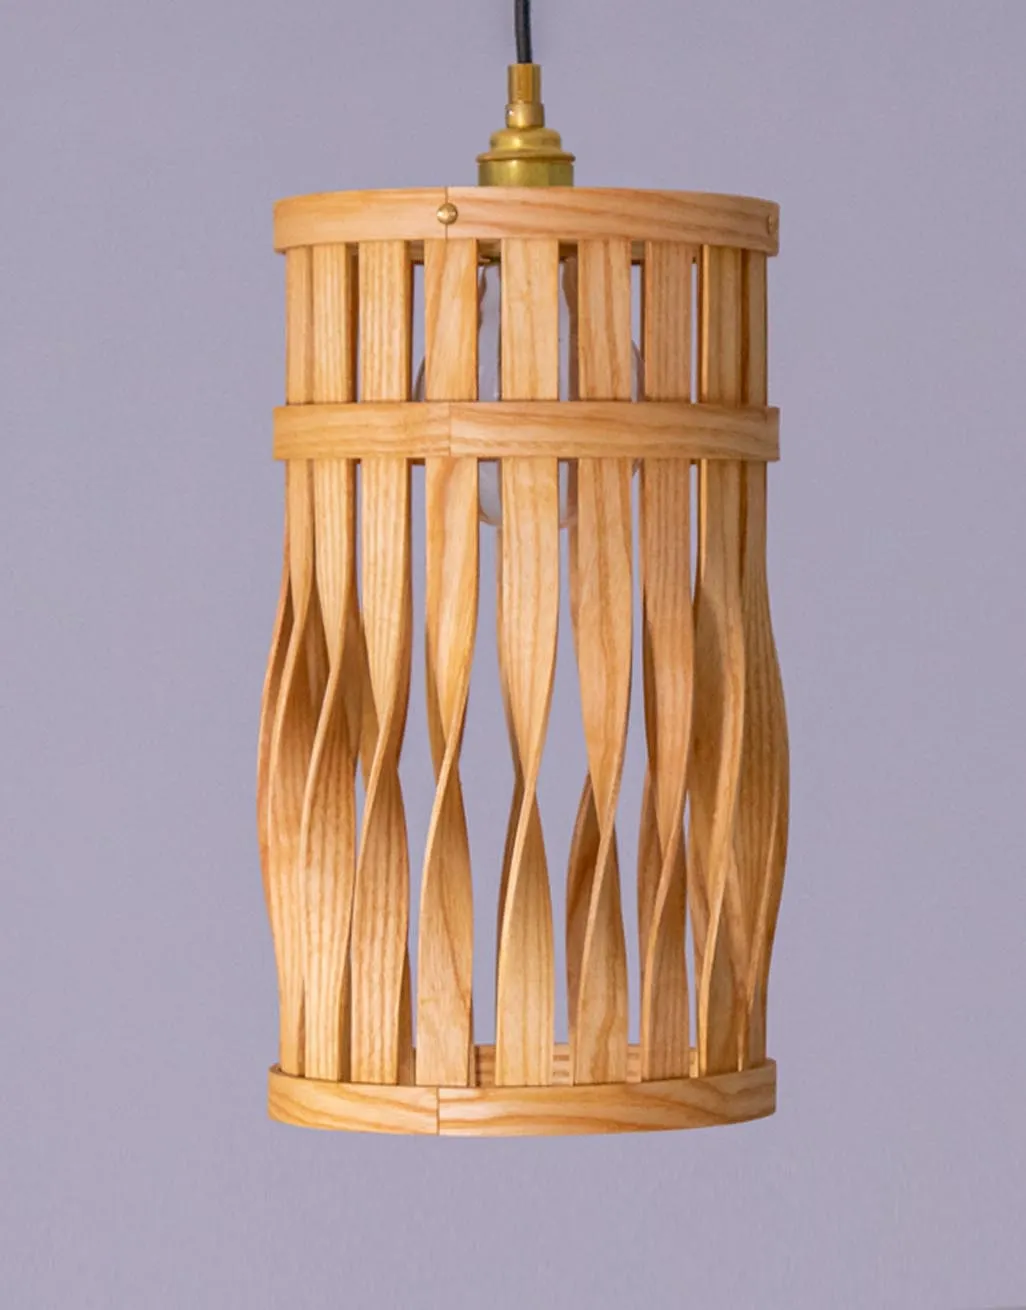 Fabbri Wooden Steam Bent Lamp Shade